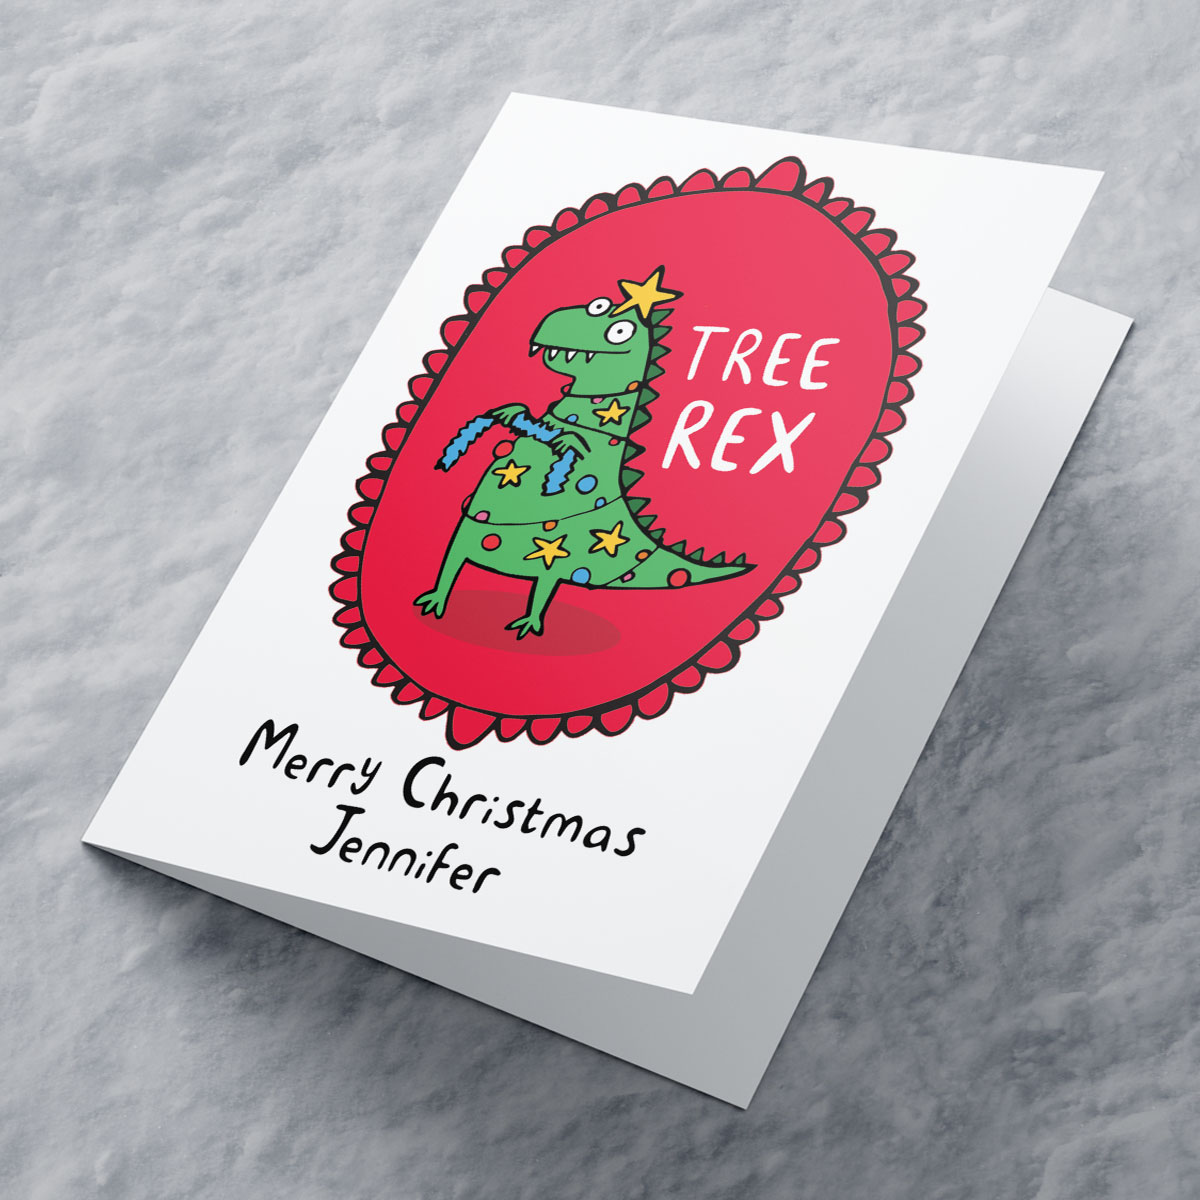 Personalised Katie Abey Christmas Card - Tree Rex